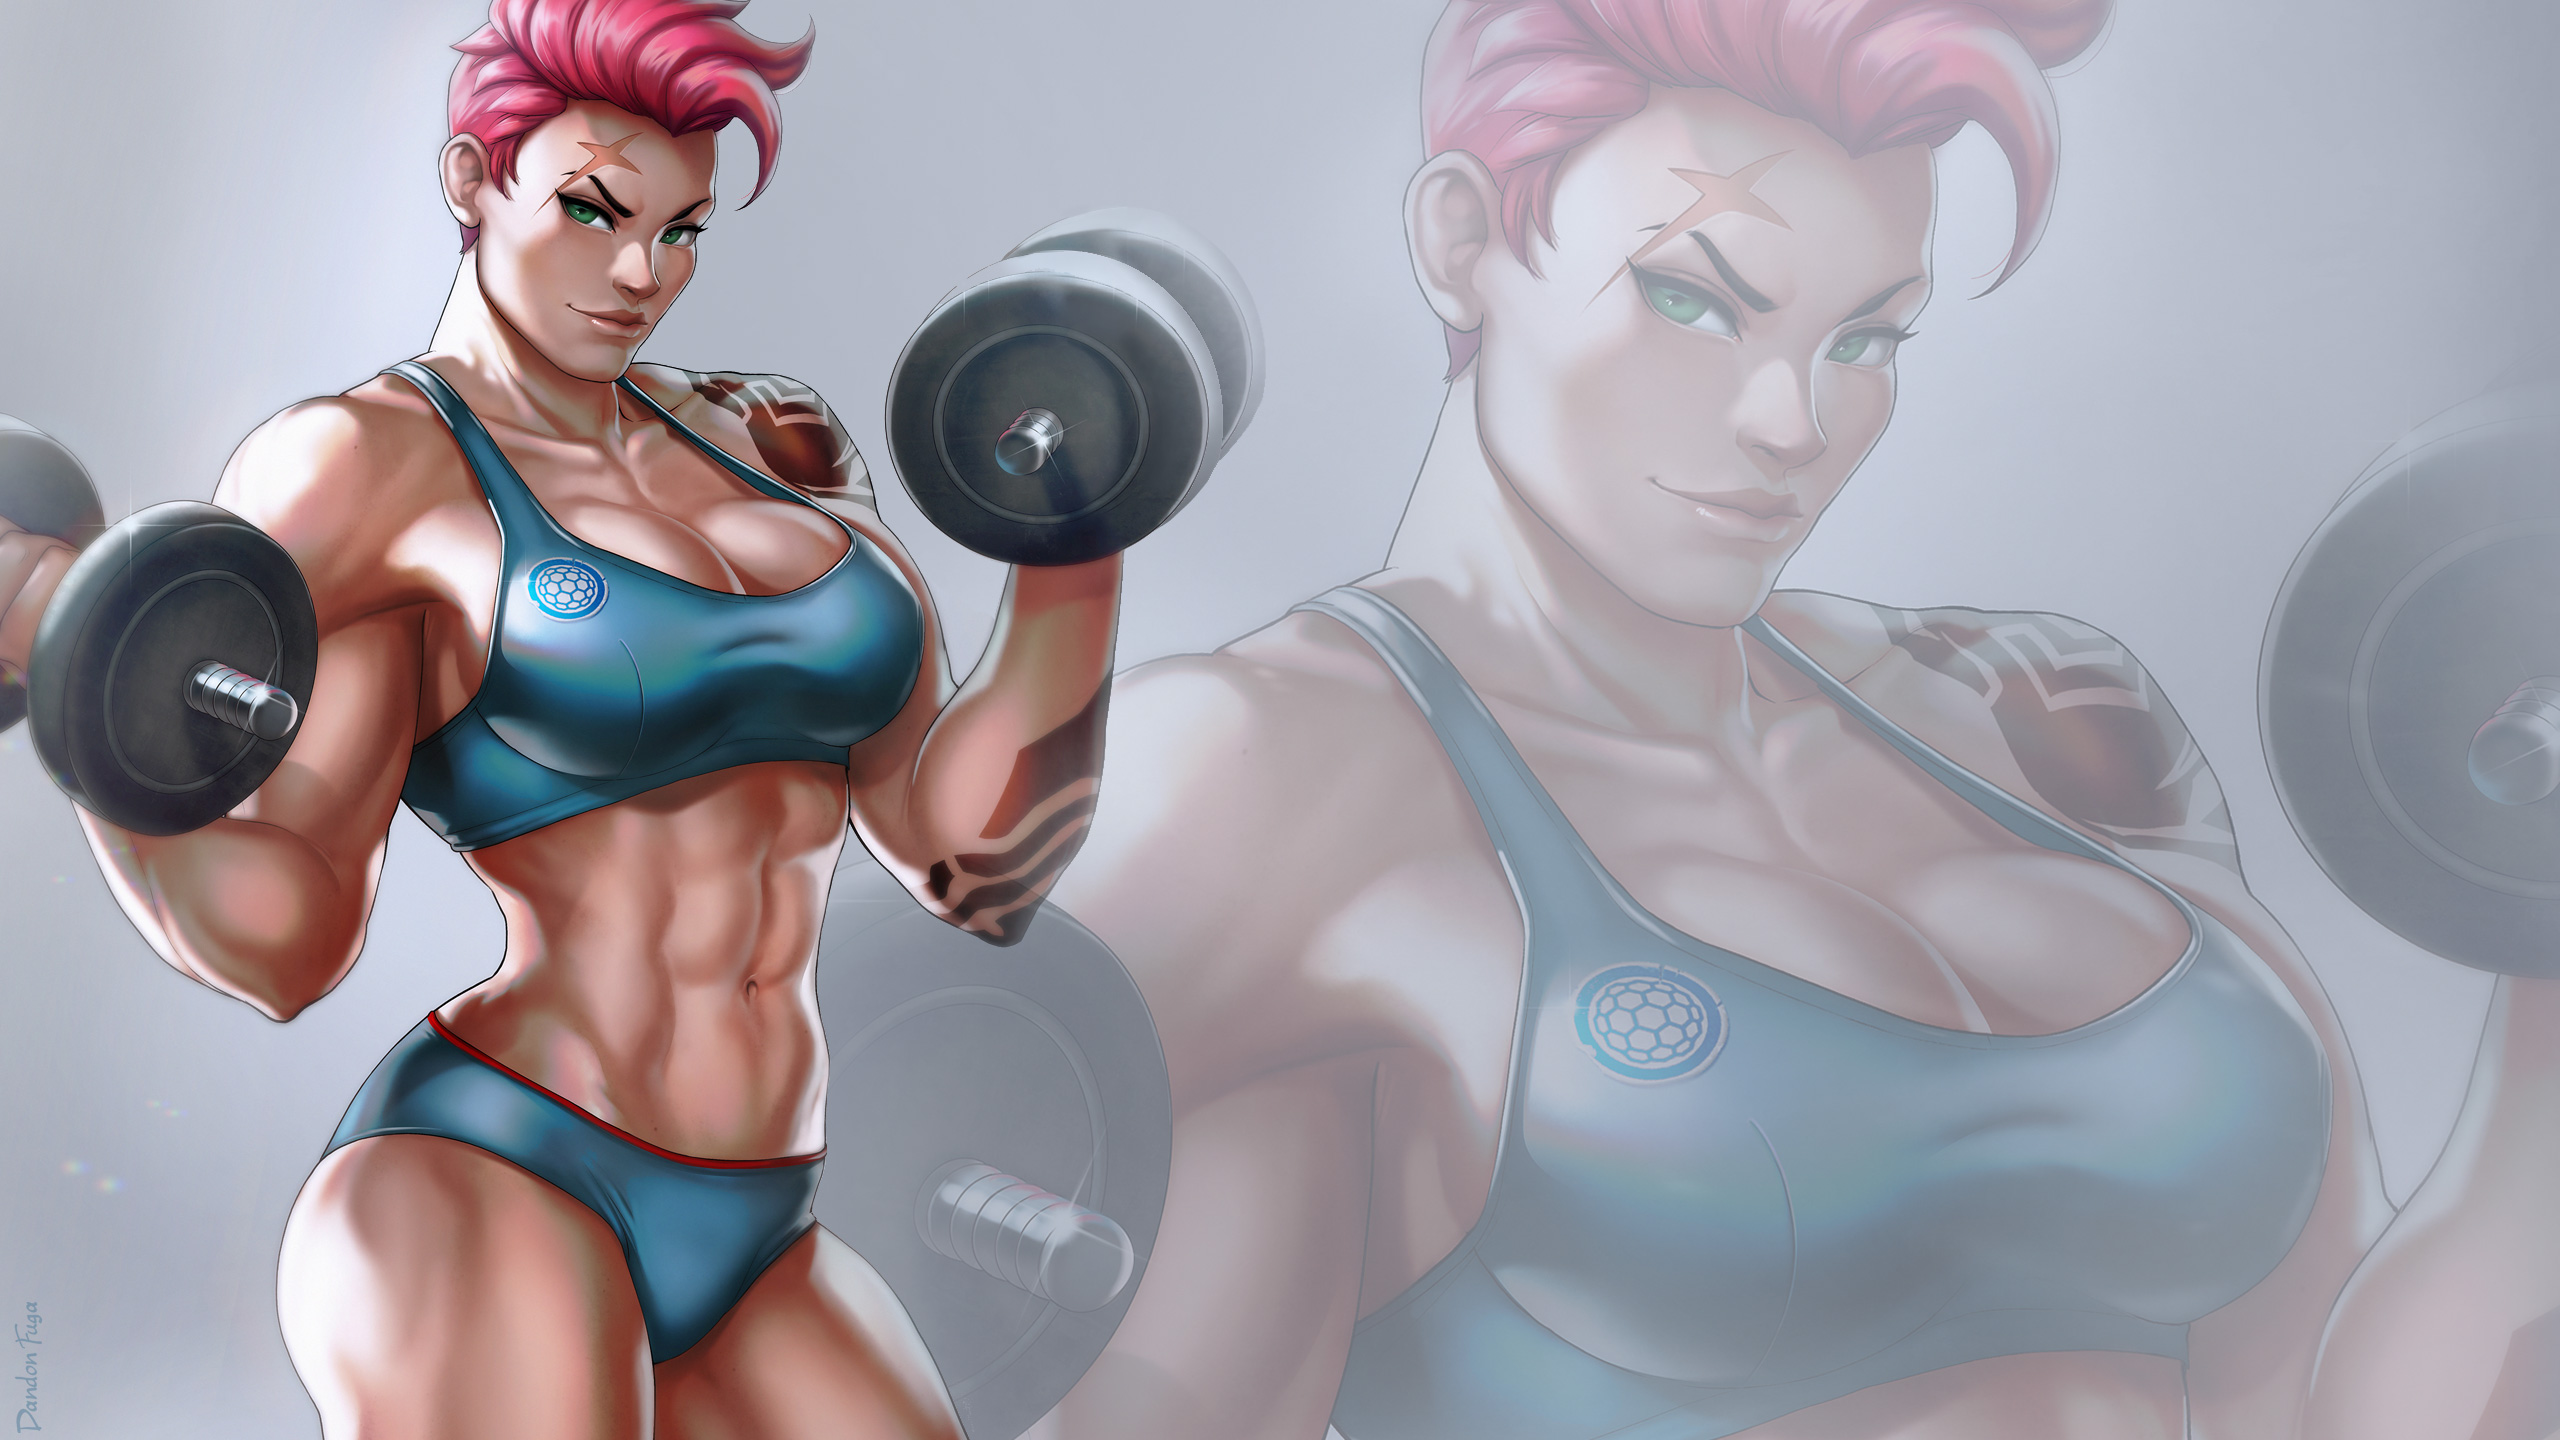 General 2560x1440 Dandonfuga Zarya (Overwatch) Overwatch pink hair weightlifting tattoo video game characters digital art watermarked